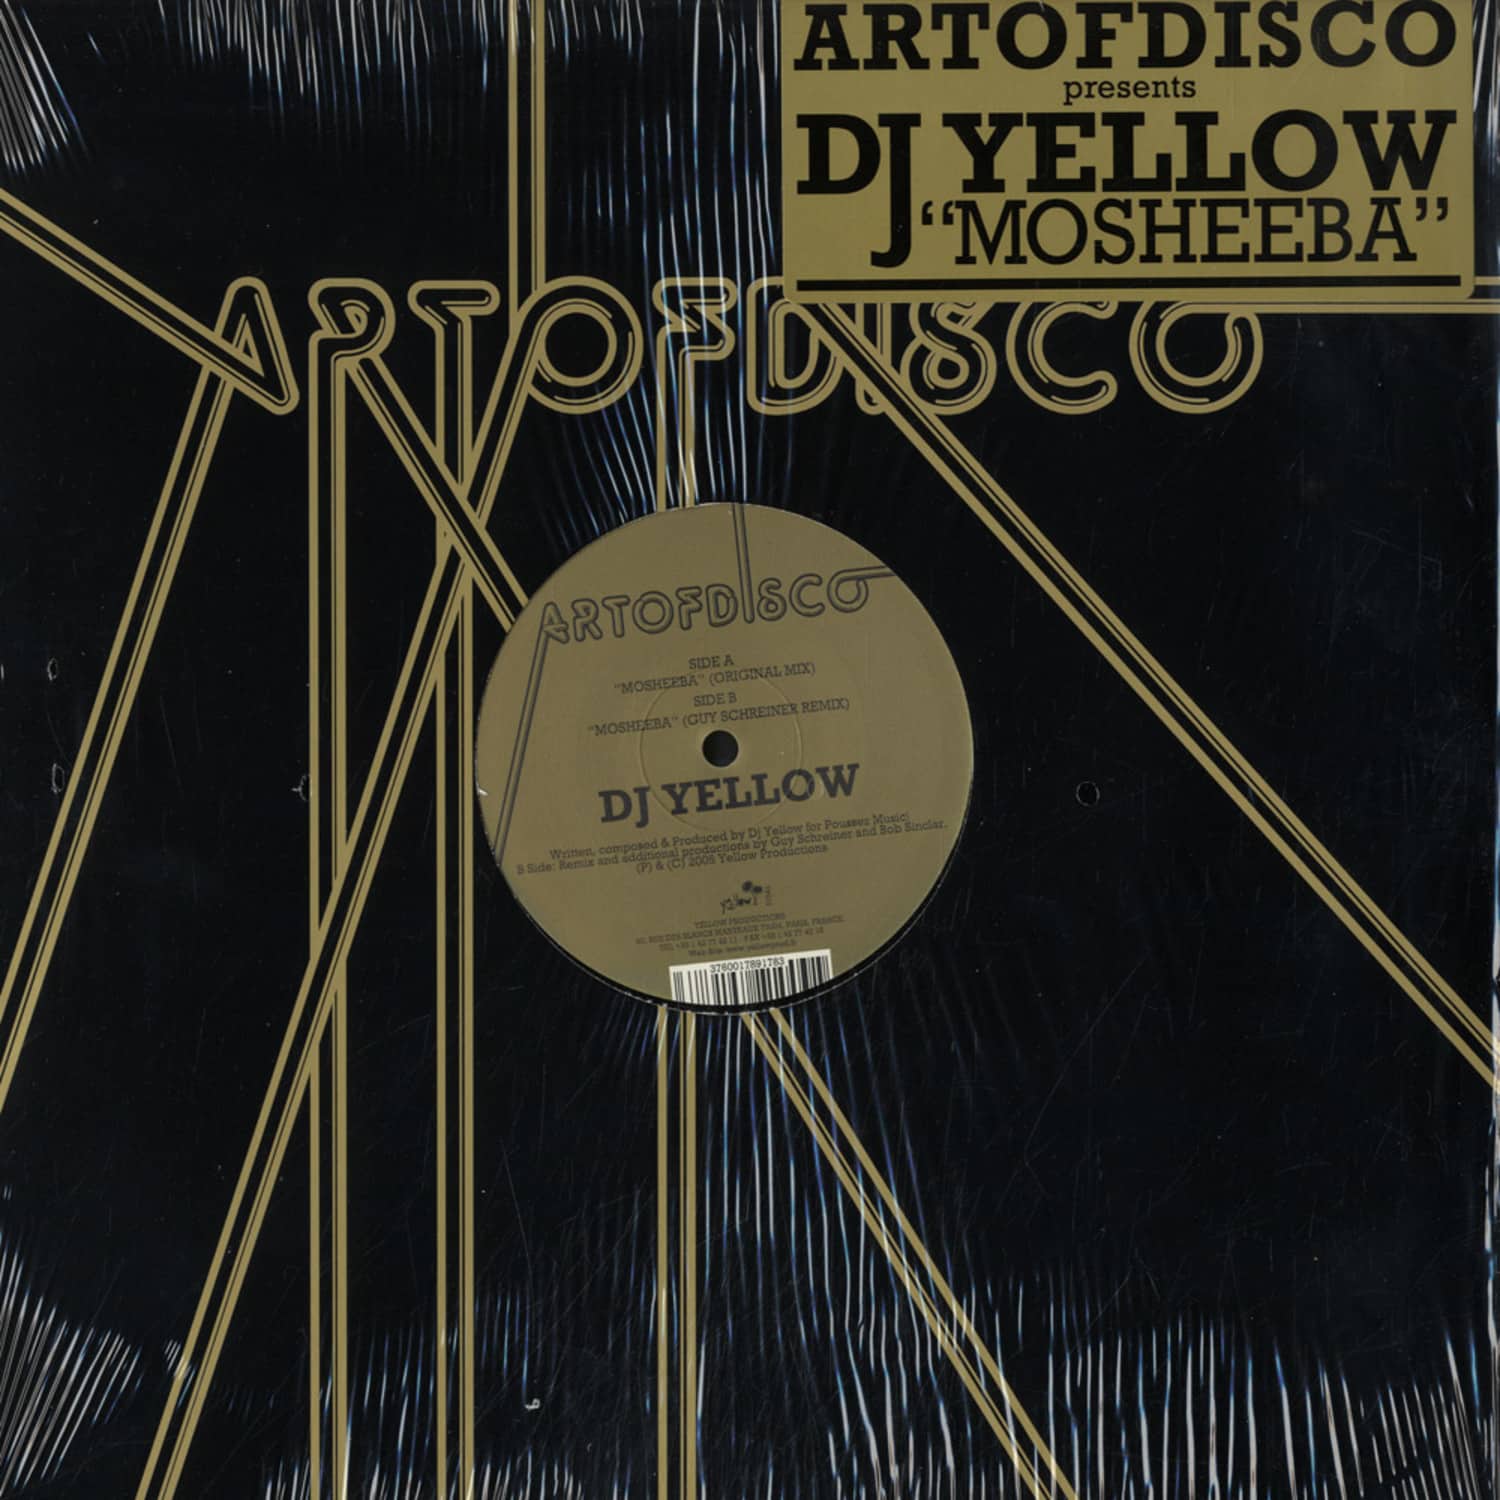 Art Of Disco pres. DJ Yellow - MOSHEEBA